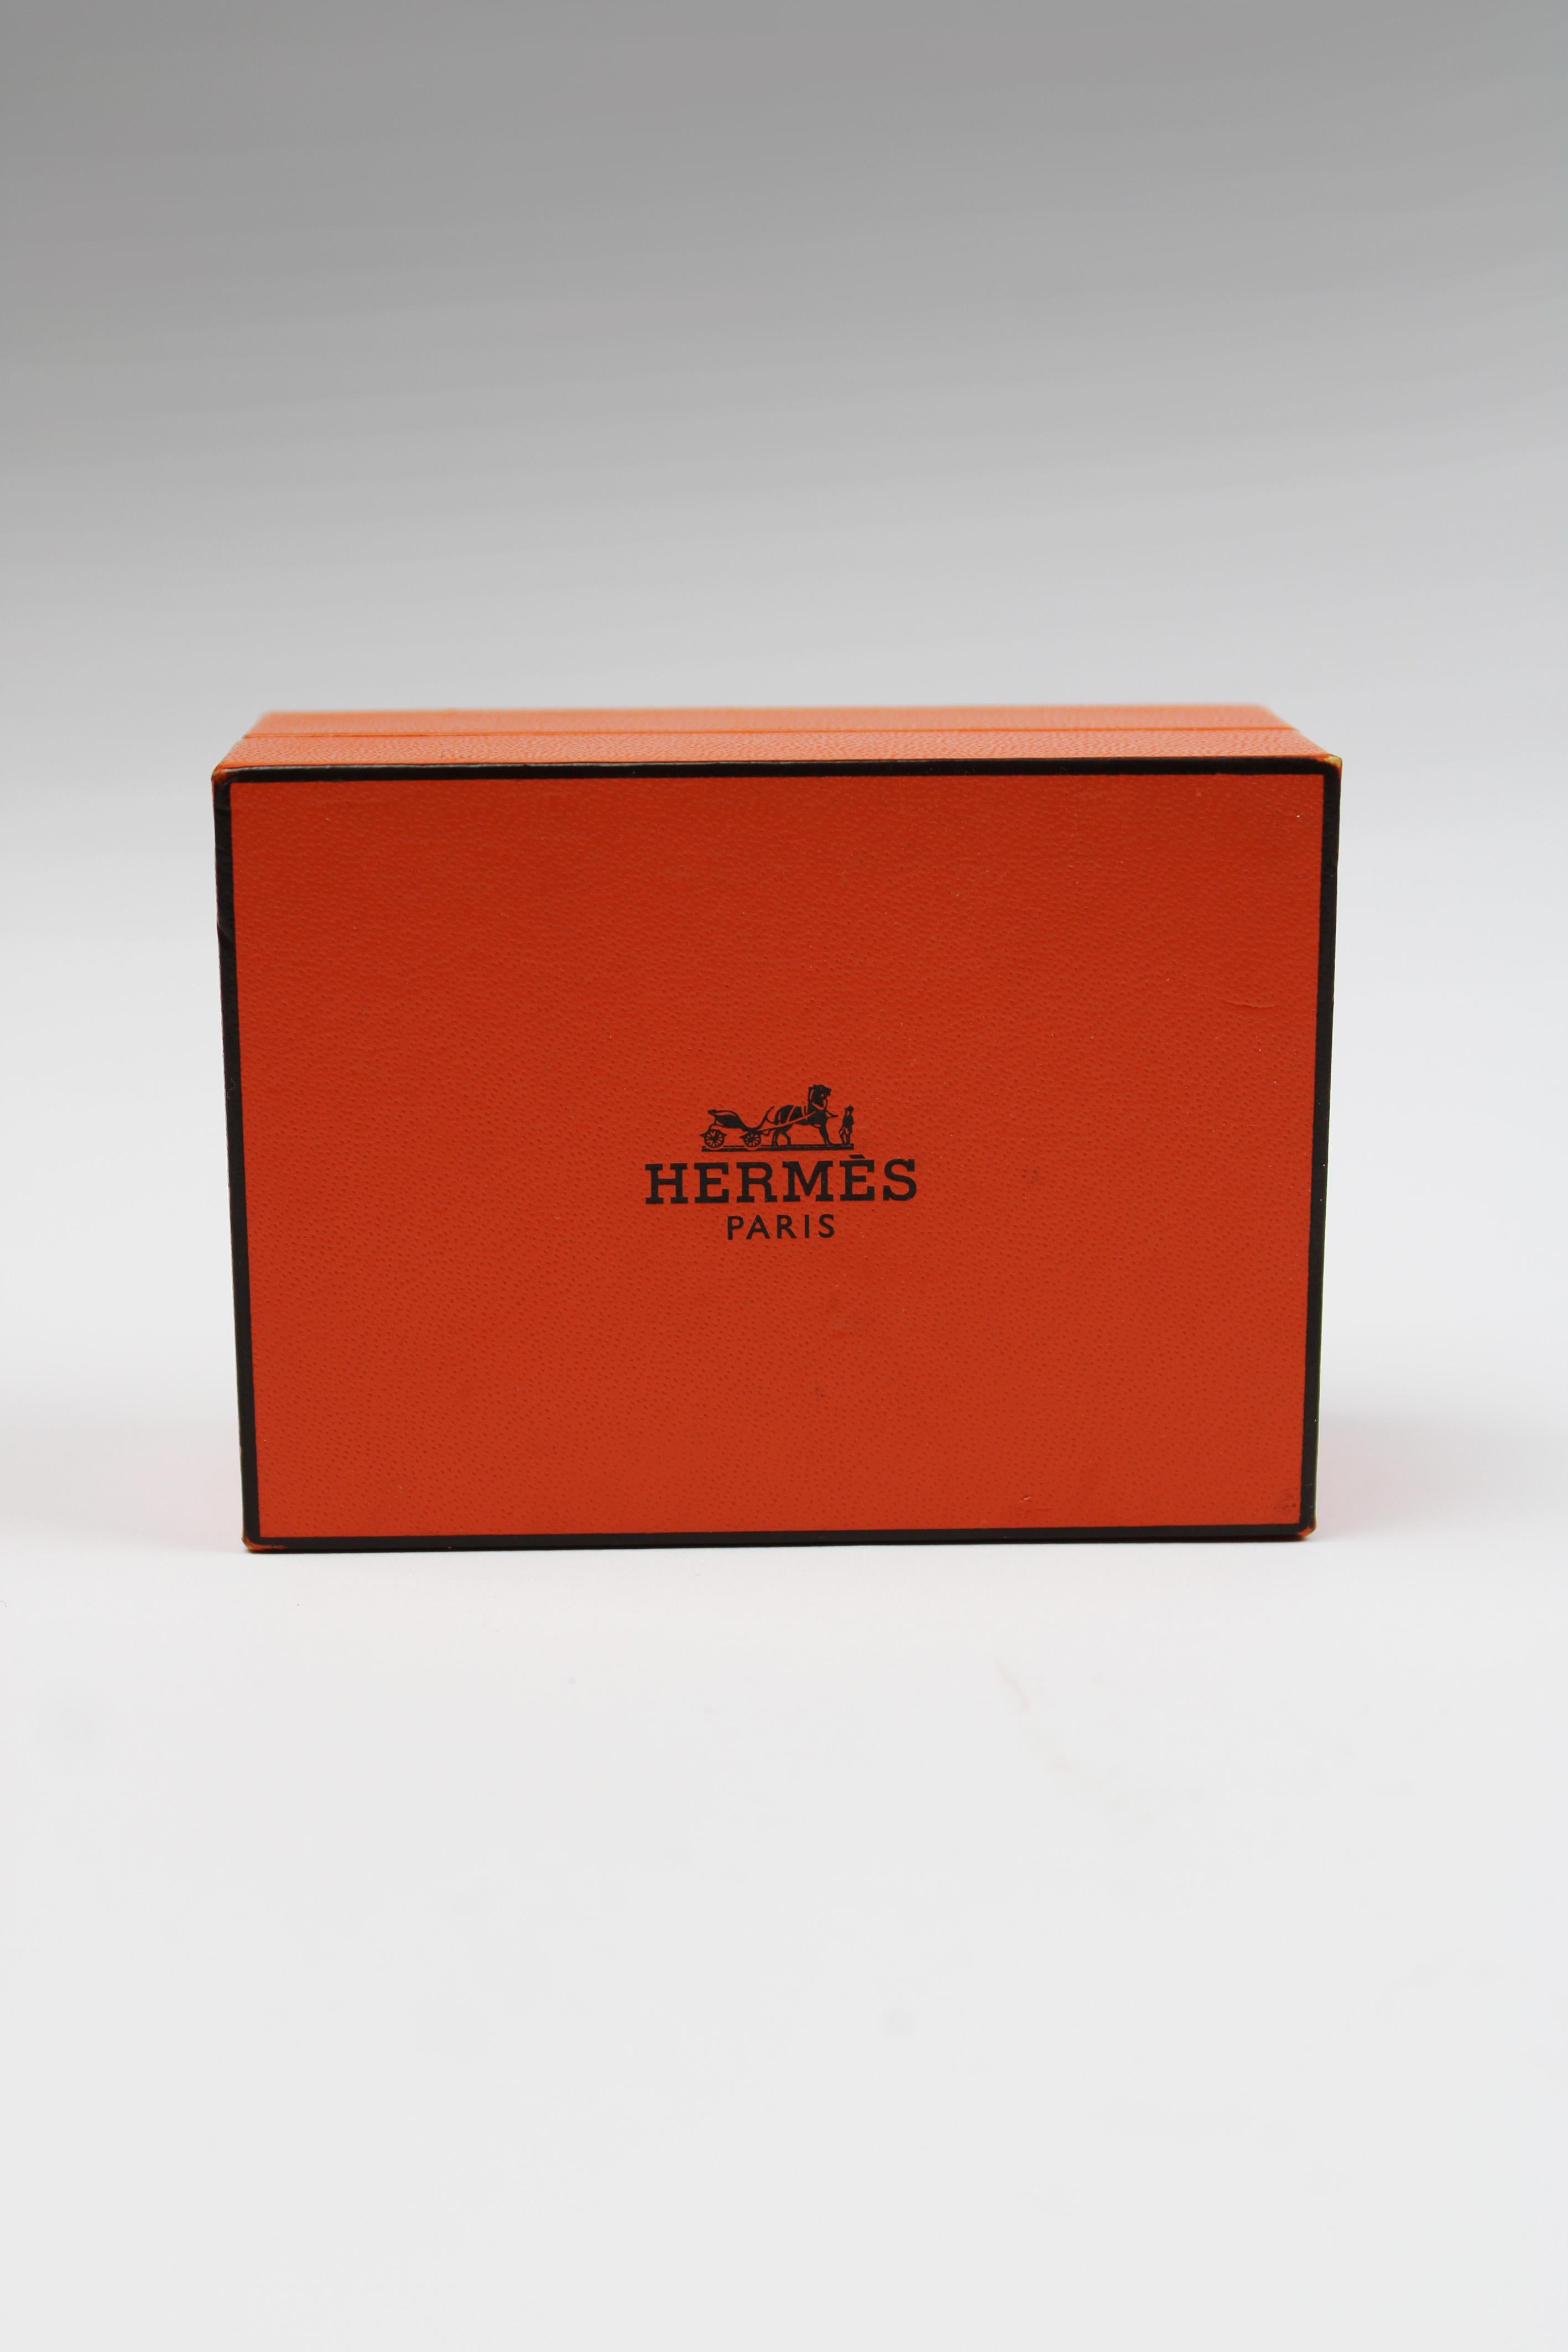 Hermès Sterling Silver Stirrup Cufflinks Box Paris France 21th Century For Sale 3